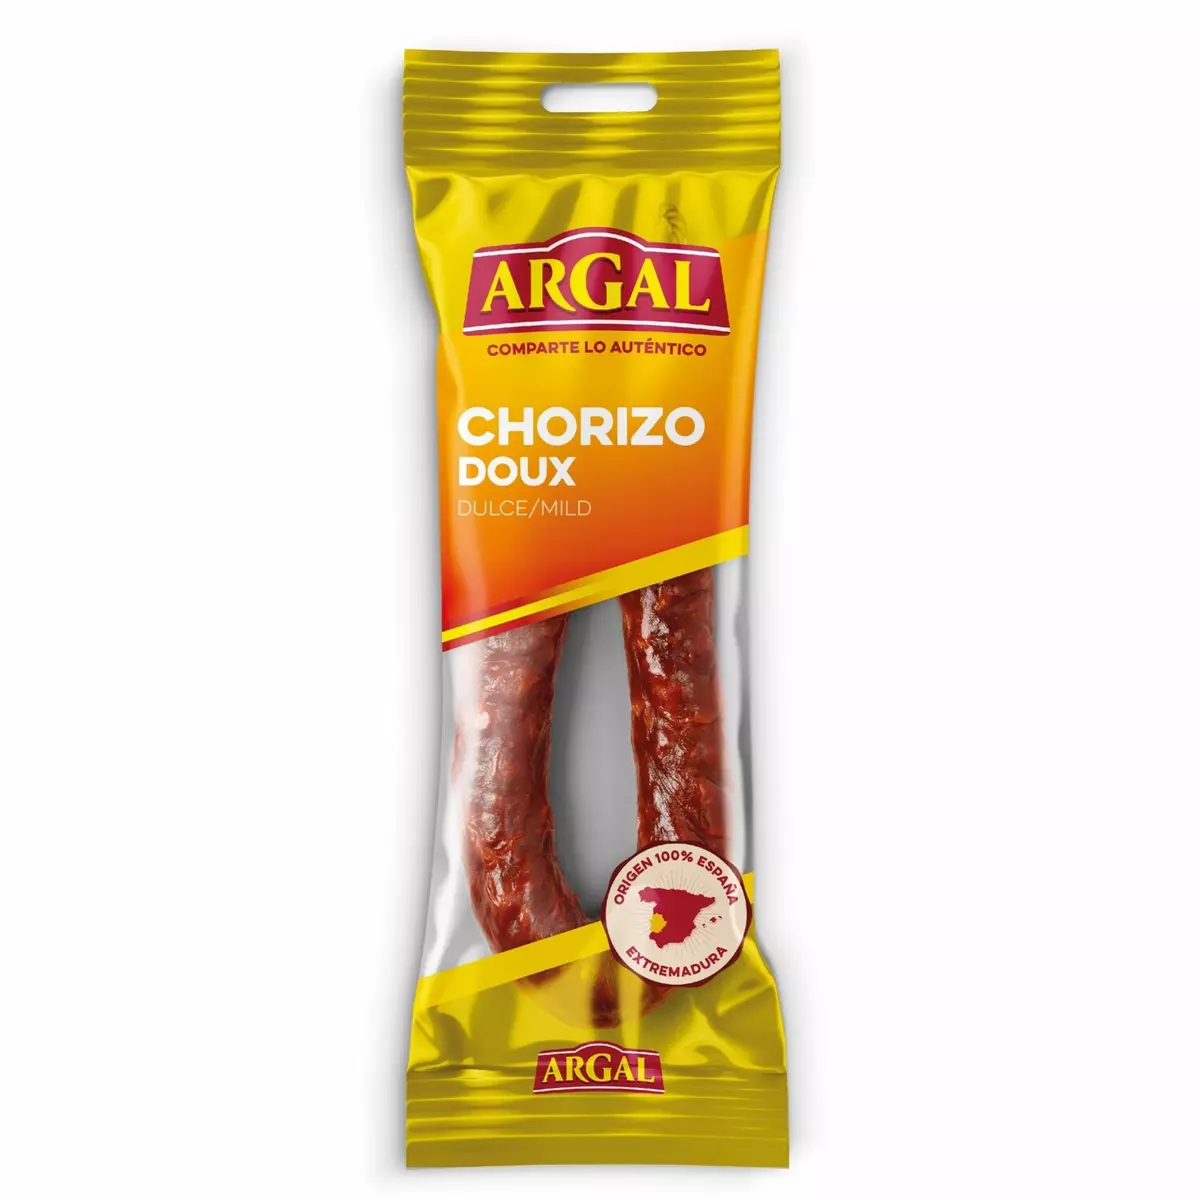 ARGAL Chorizo Sarta doux espagnol 200g